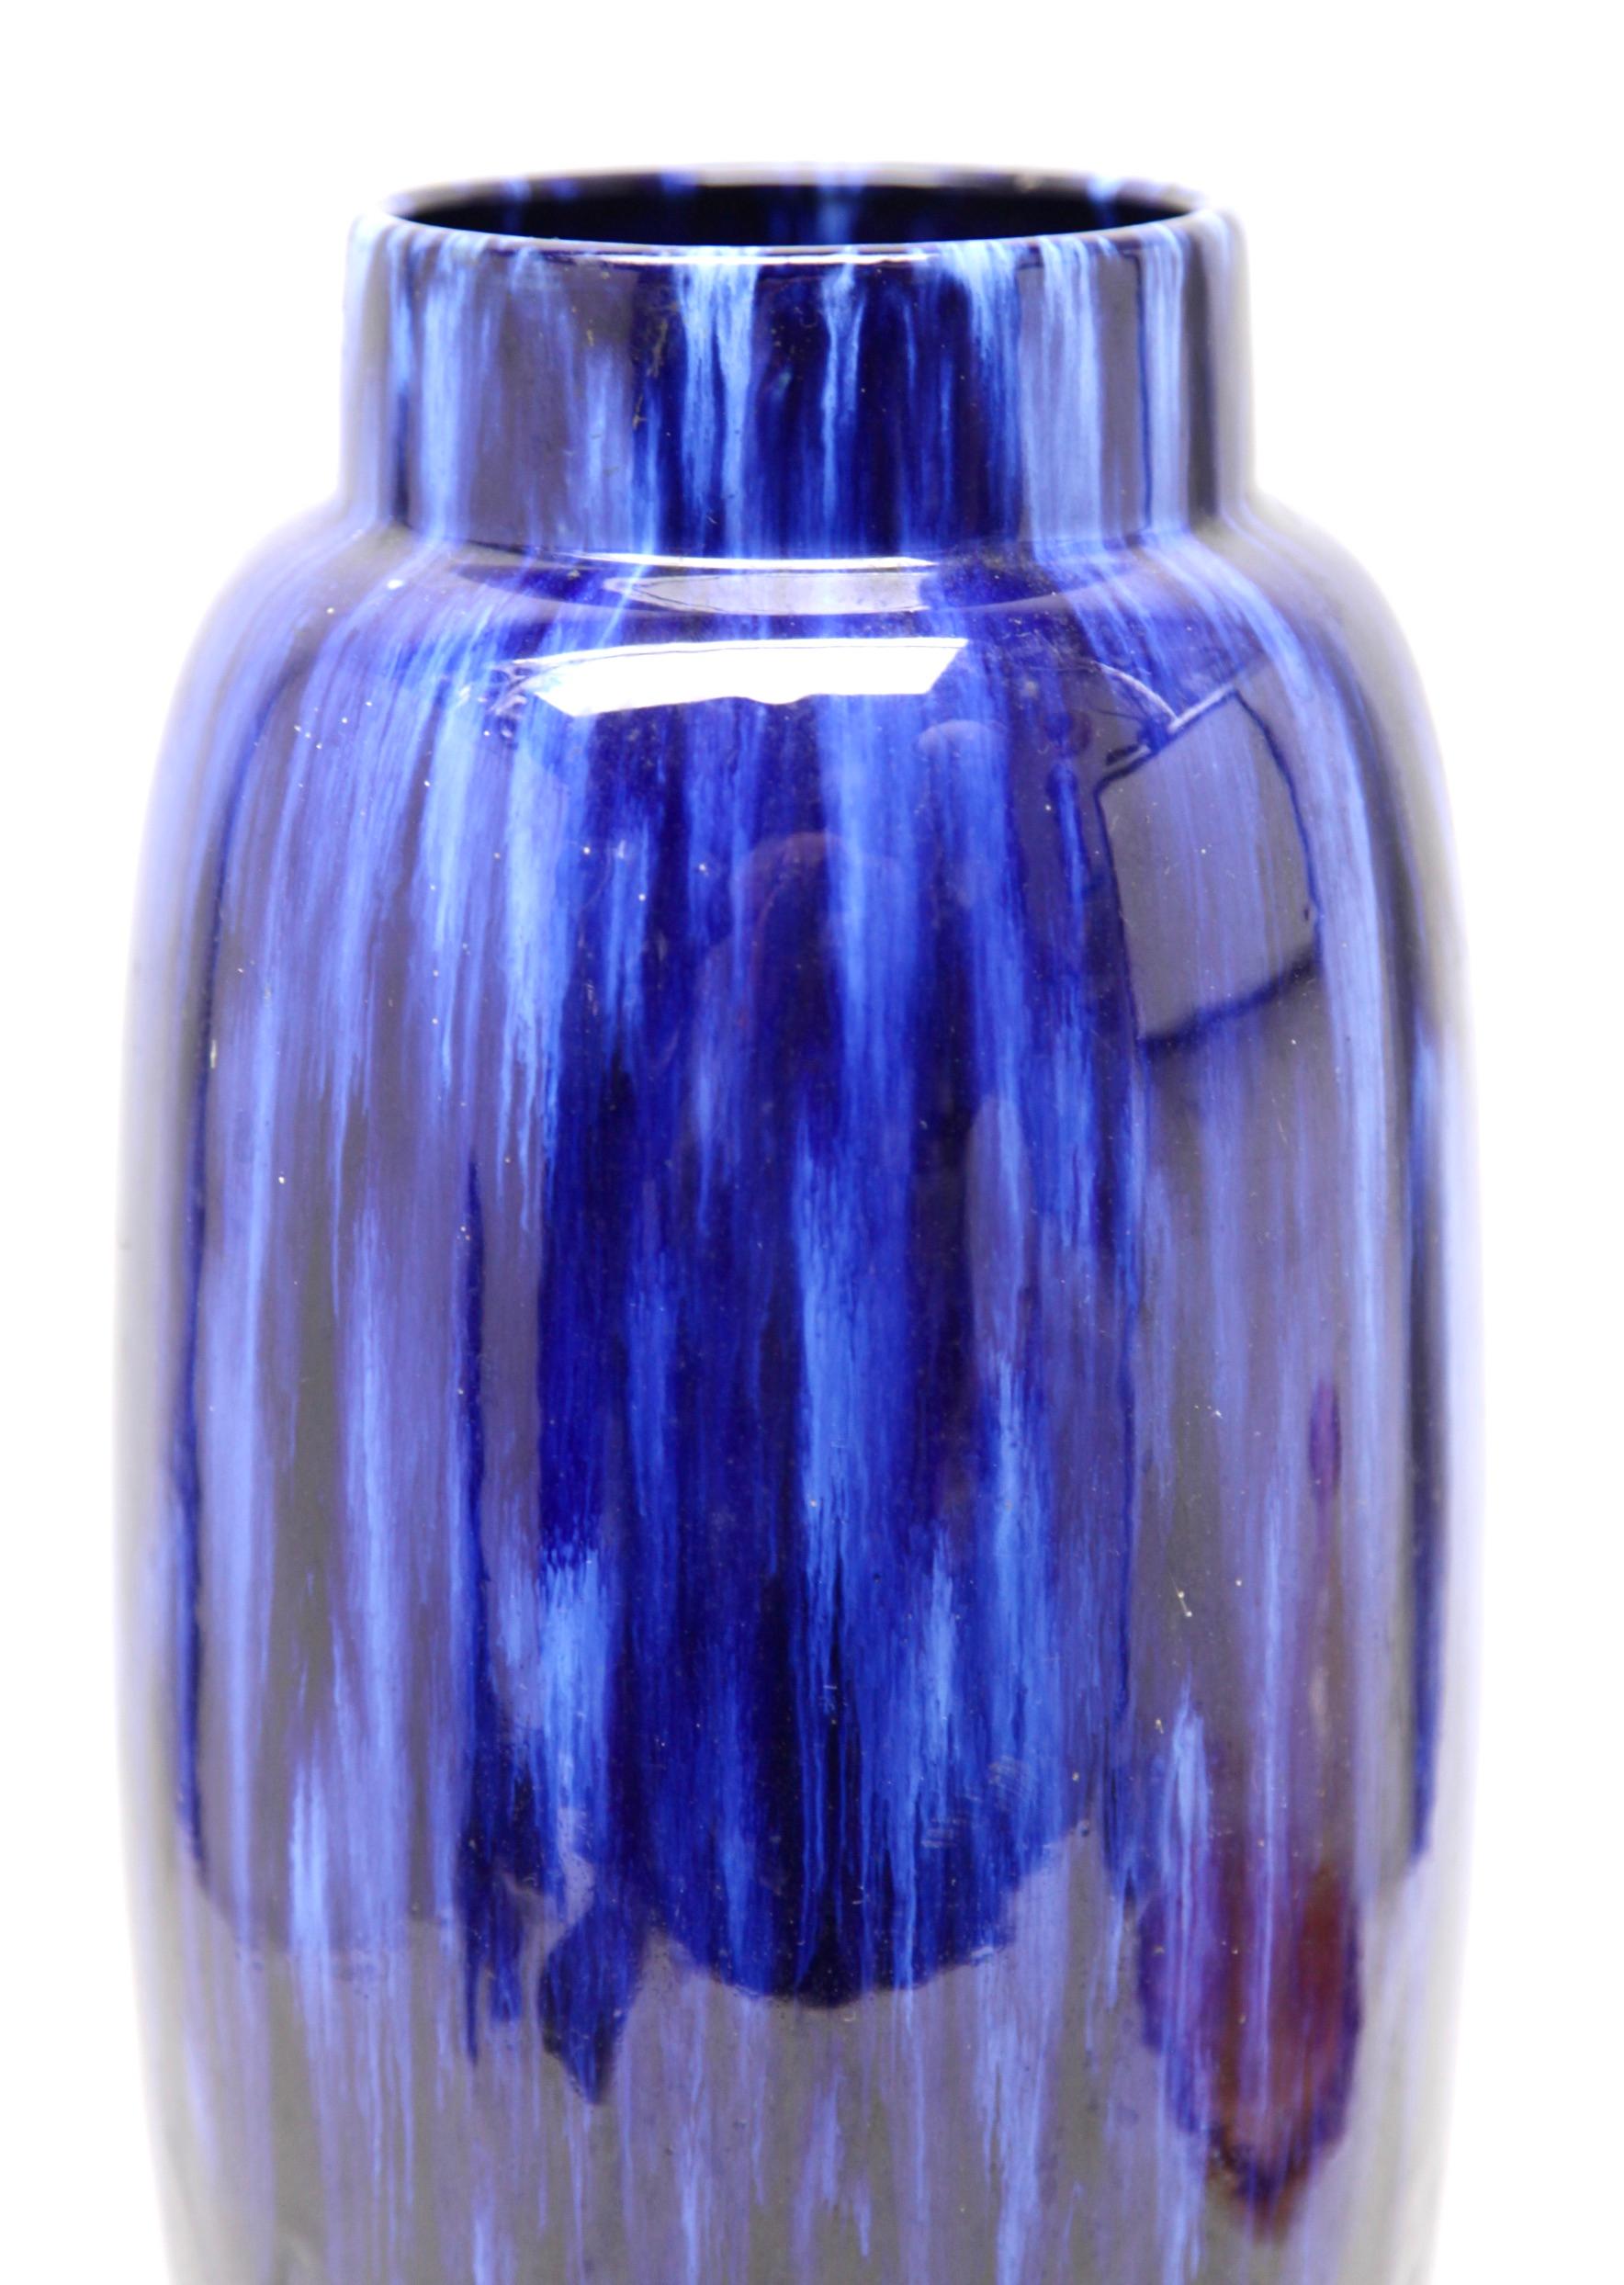 Glazed Scheurich Vintage Vase in Blue and Black Drip Glaze Germany, 1970s For Sale